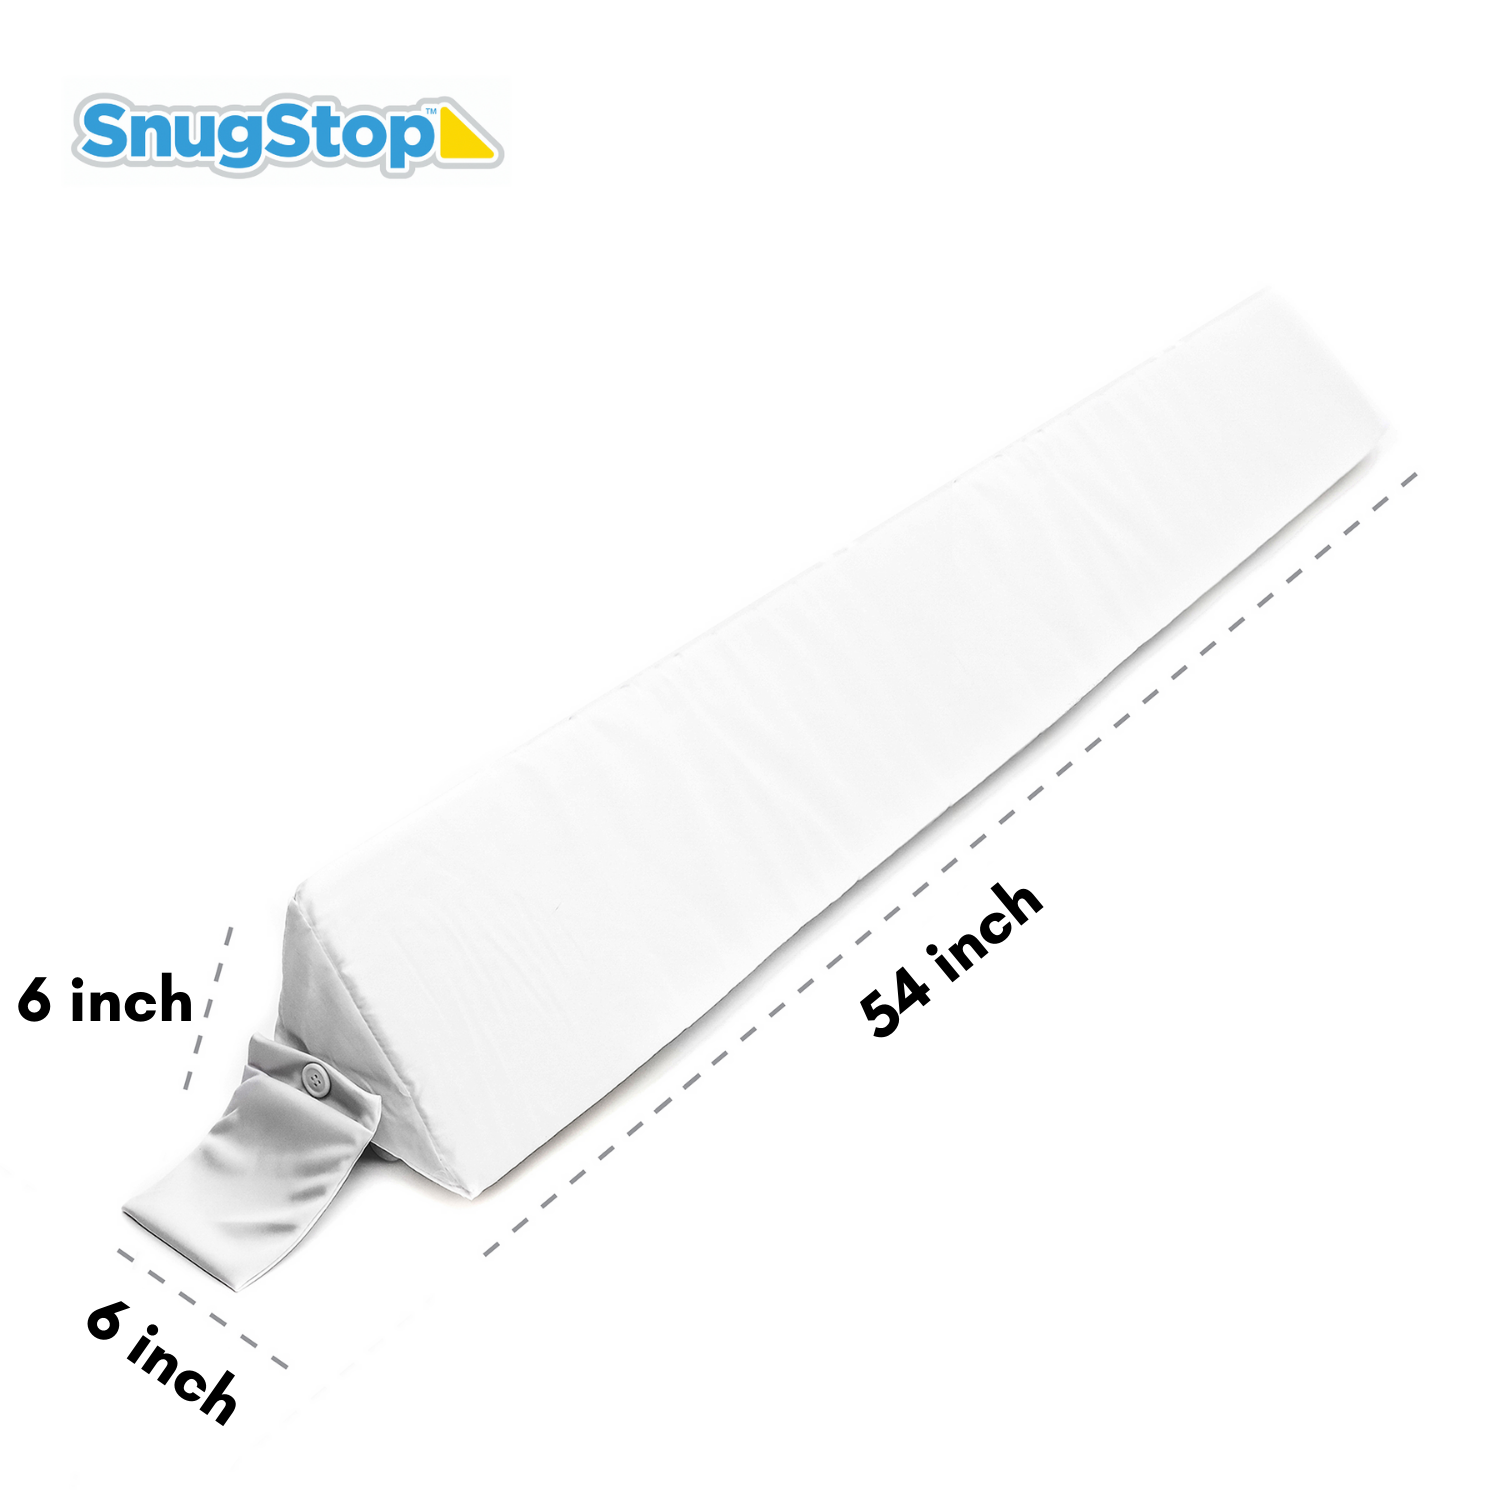 SnugStop Bed Wedge Mattress